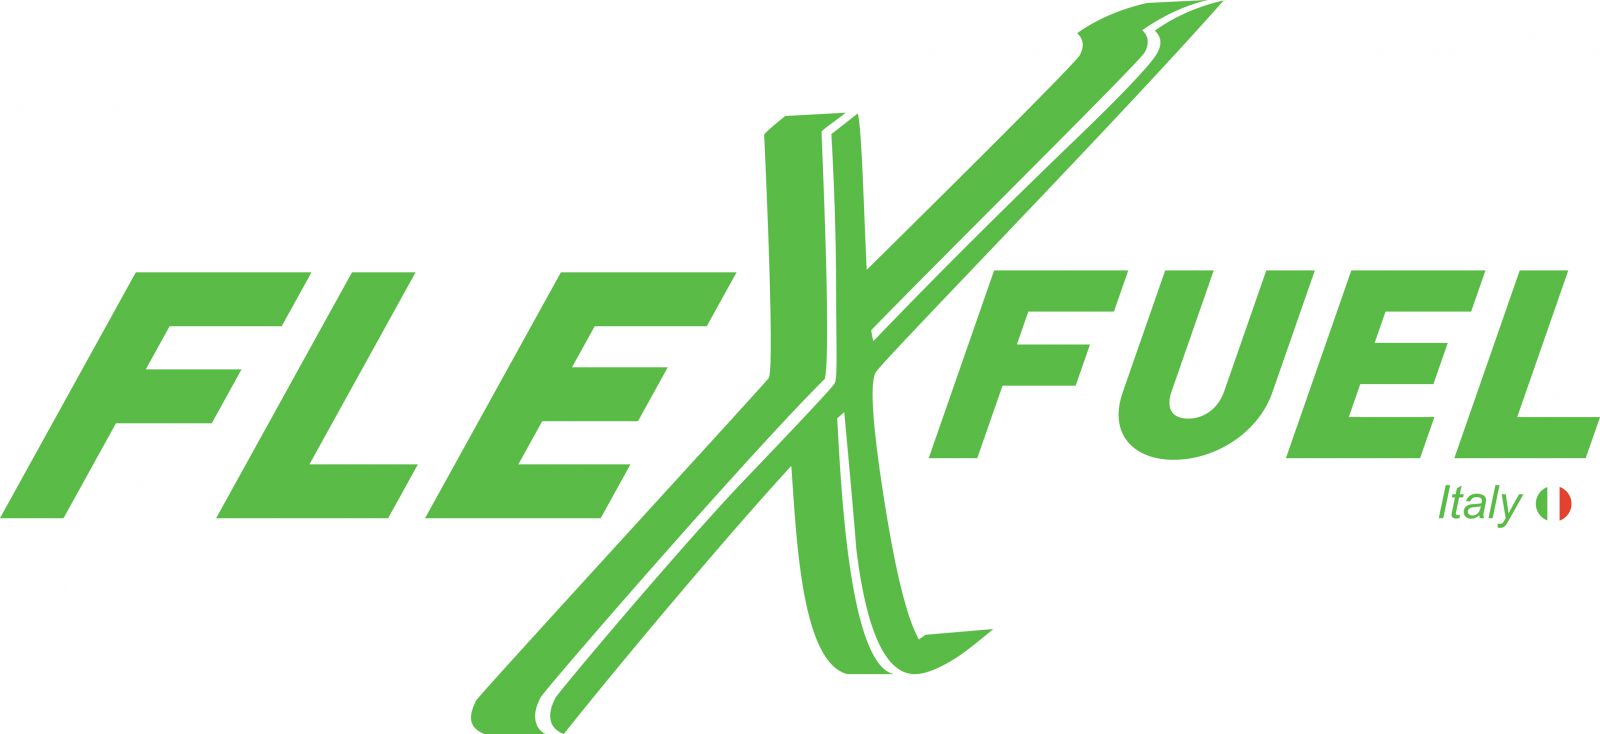 Flexfuel